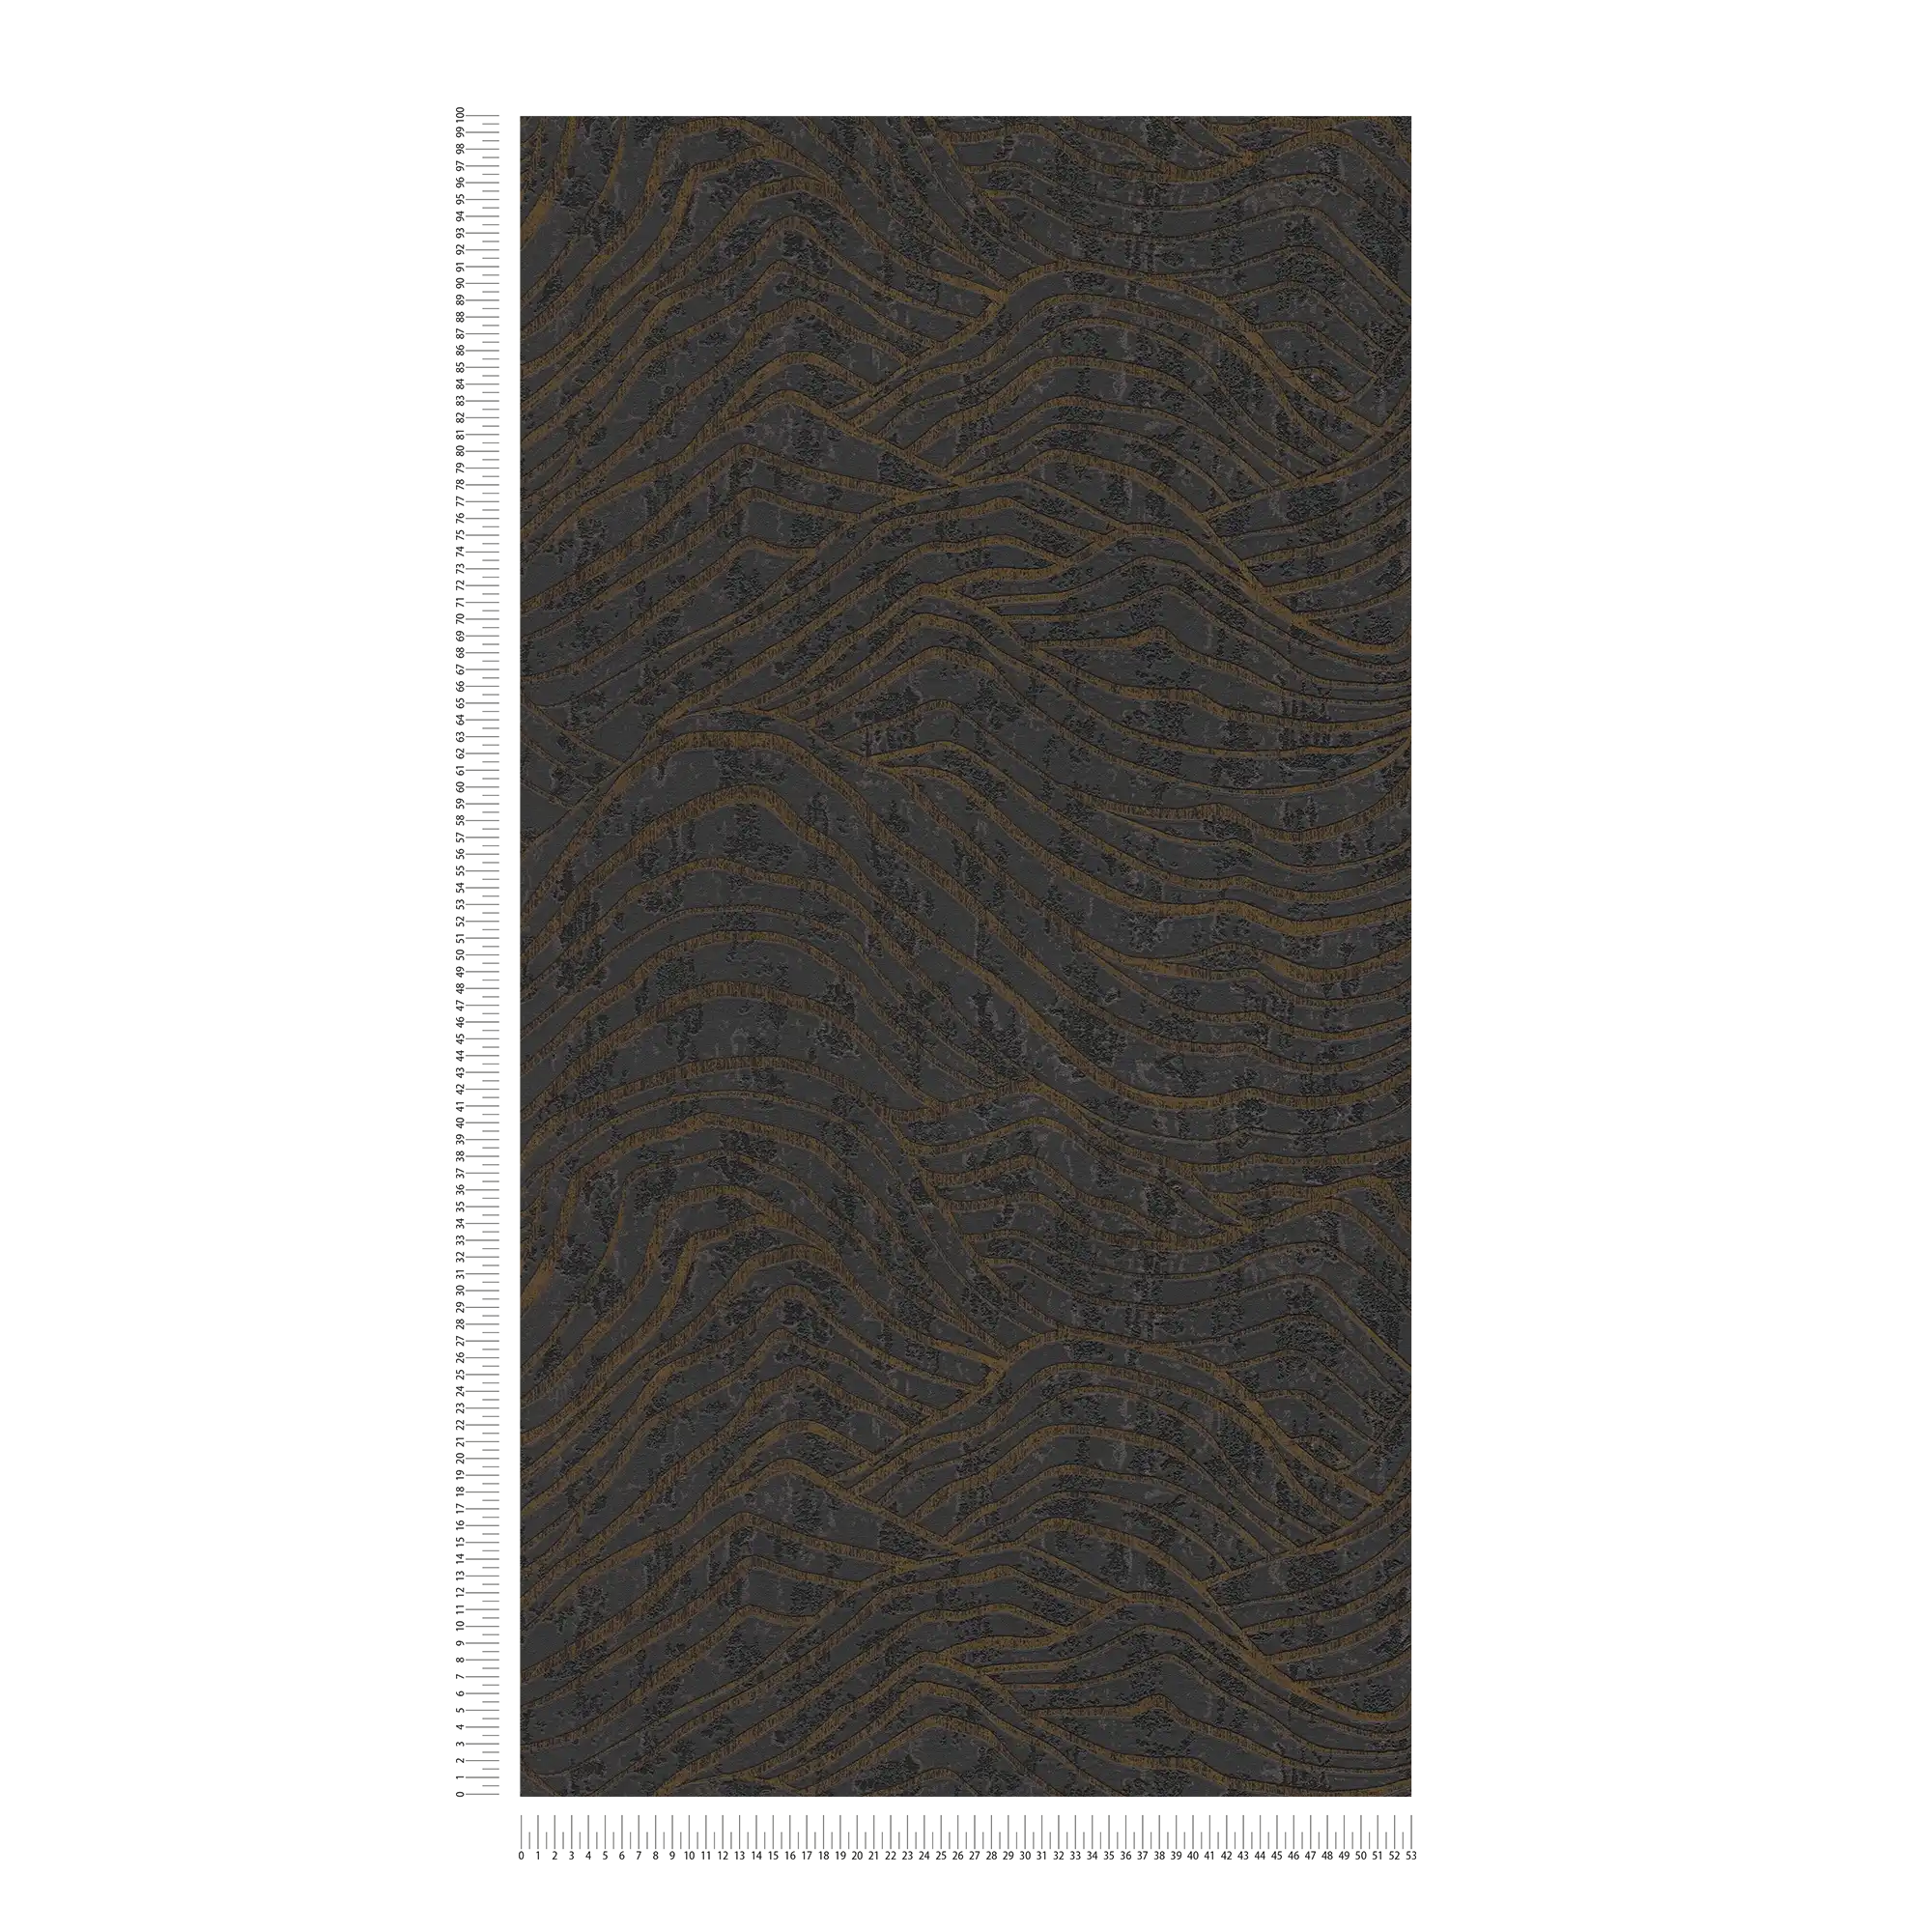             Wallpaper with horizon hill pattern - black, silver
        